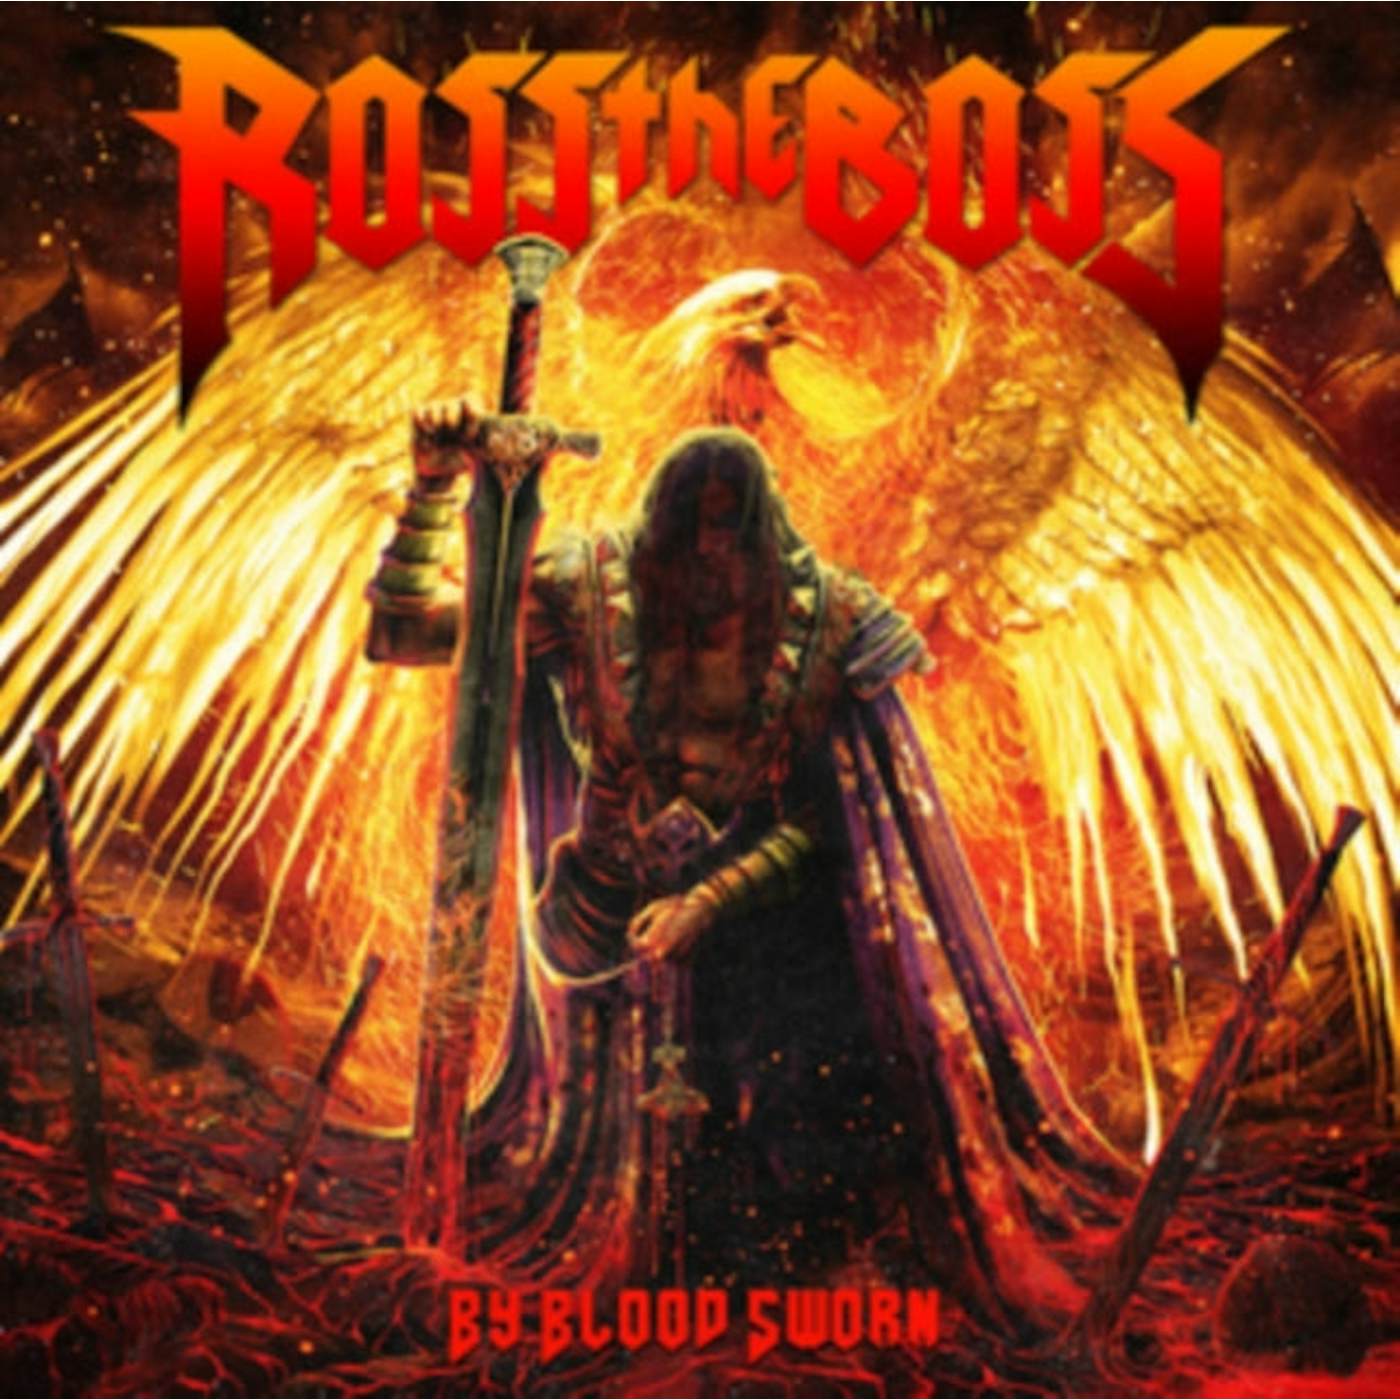 Ross The Boss CD - By Blood Sworn